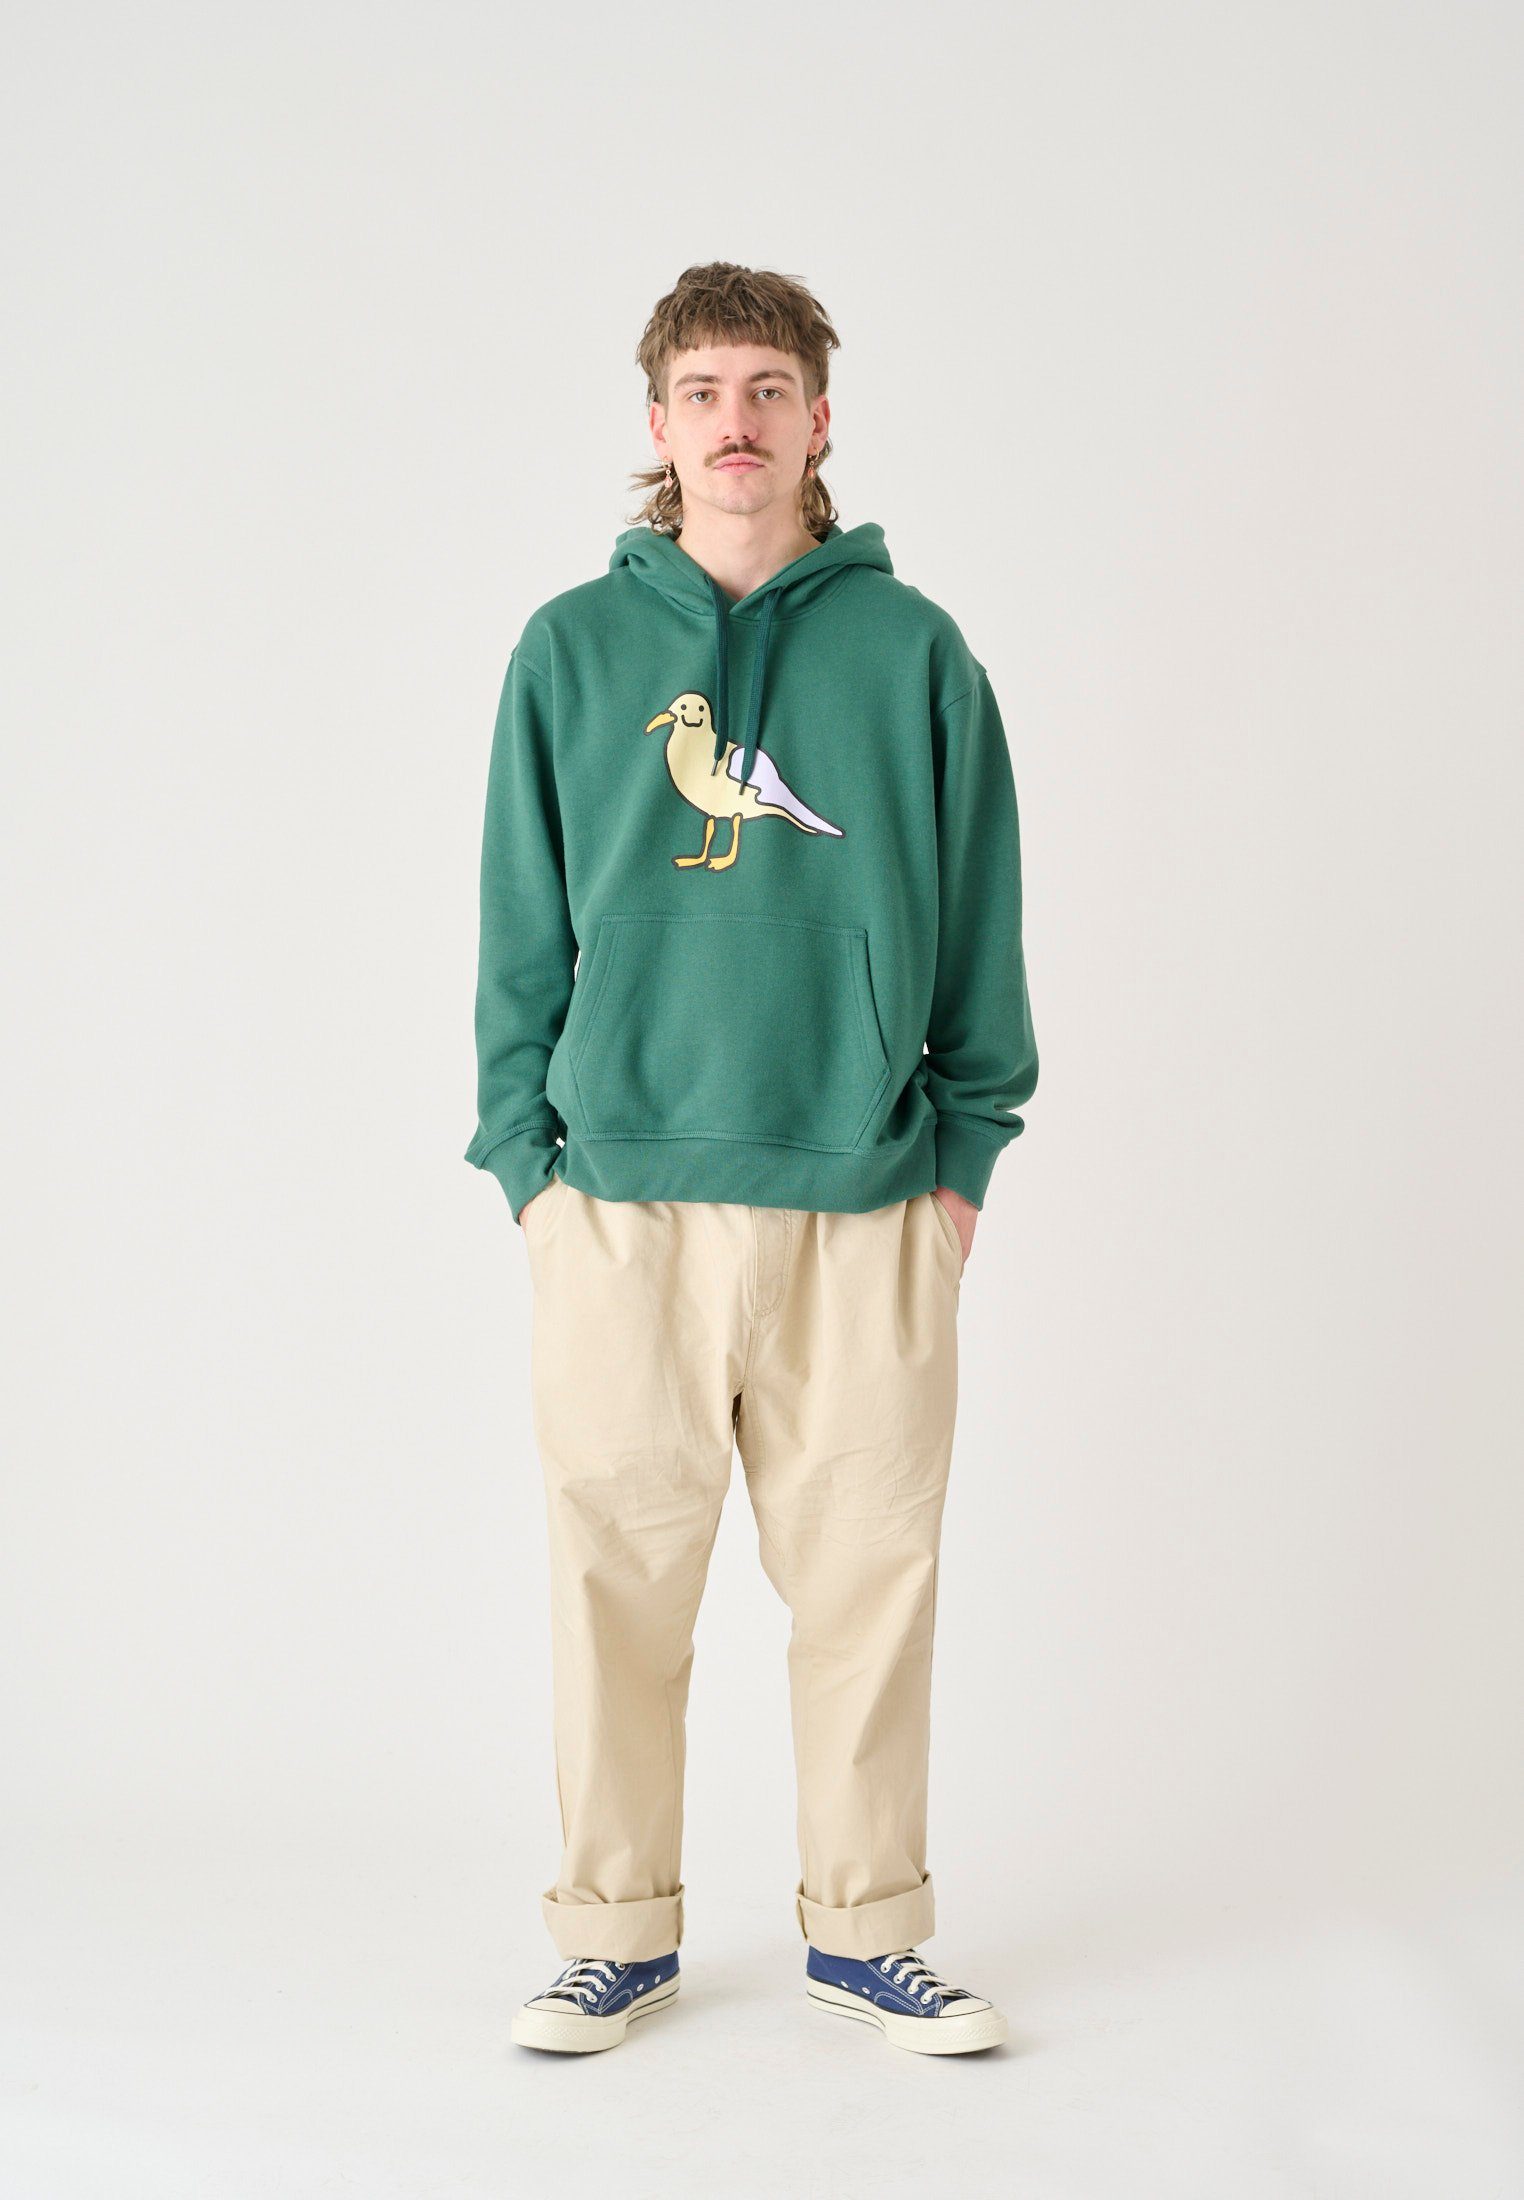 Smile Gull coolem mit Kapuzensweatshirt Print Cleptomanicx grün